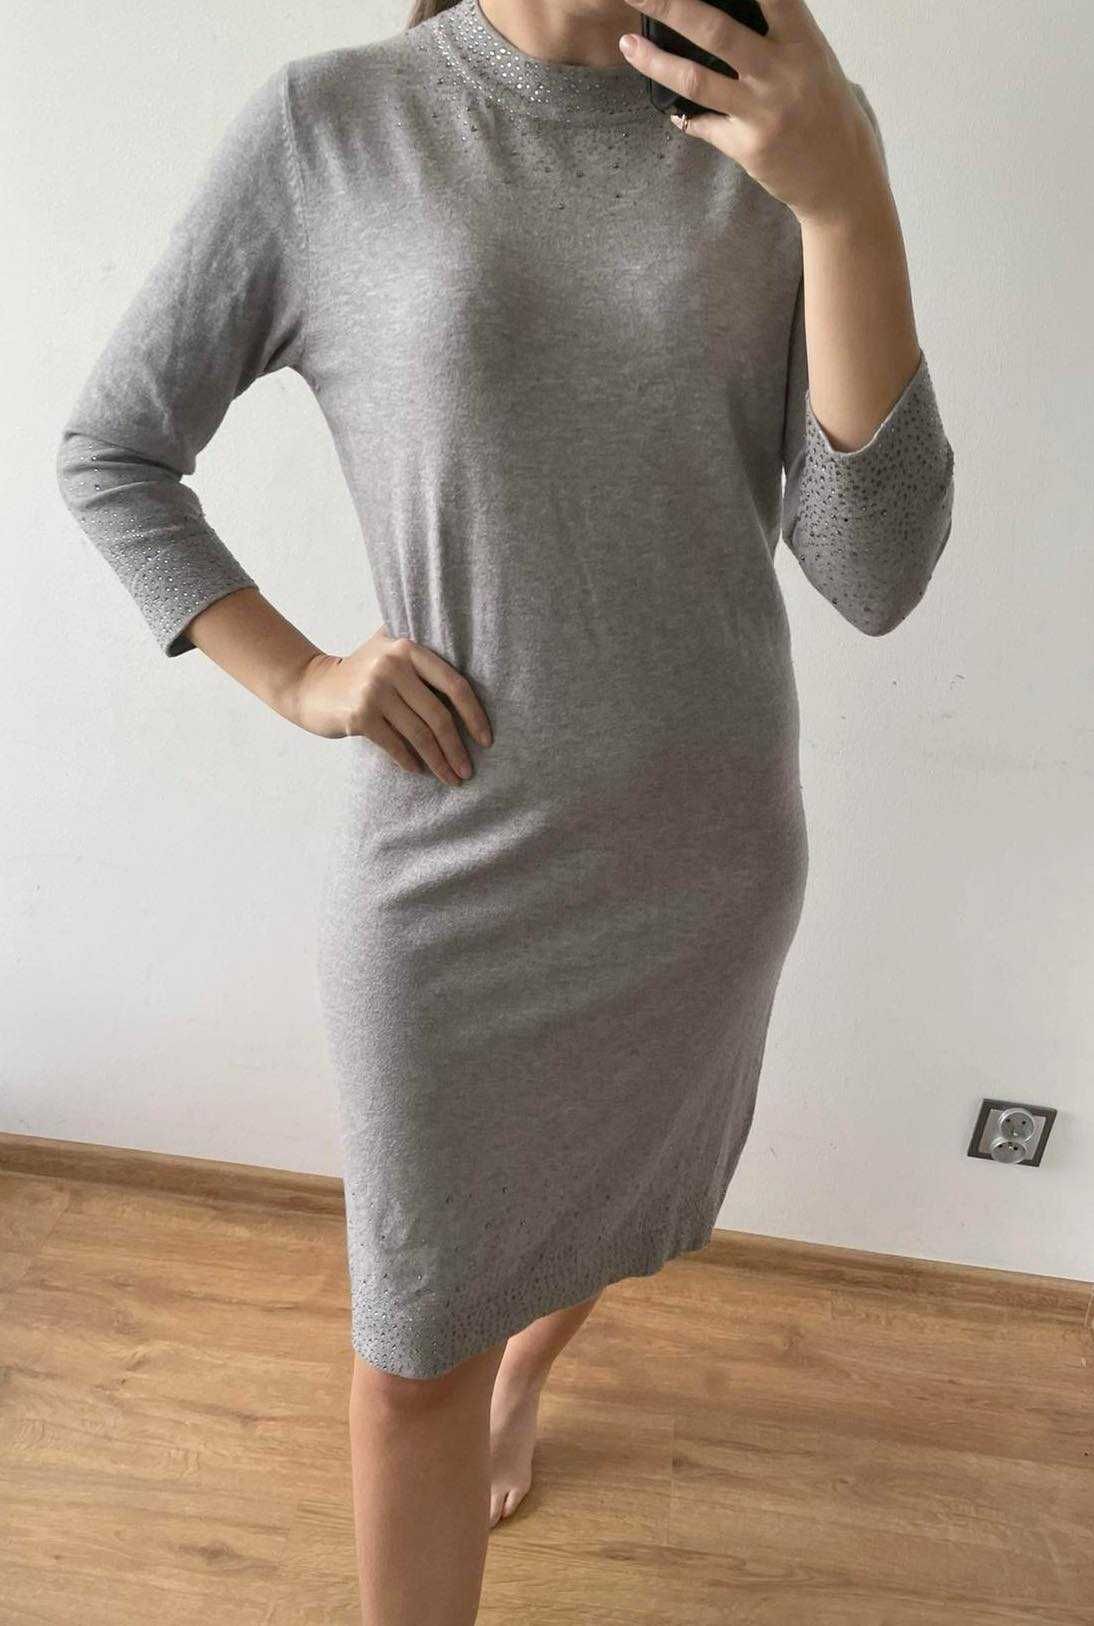 Quisque sukienka sweterkowa sweter szary 38 m l